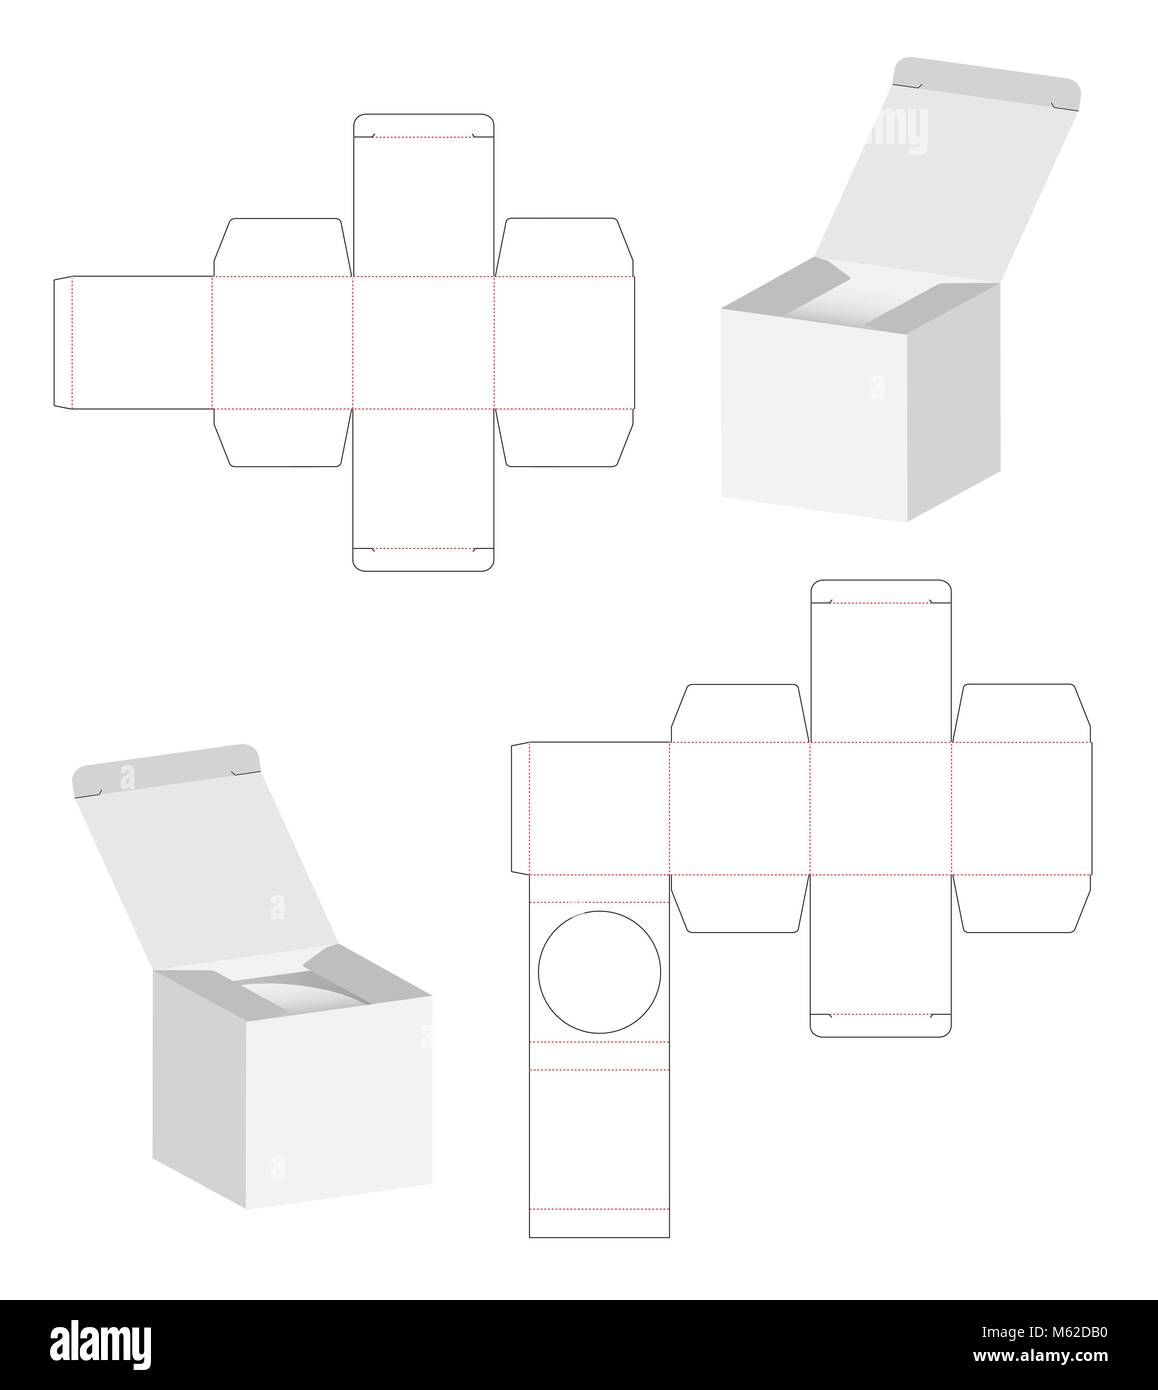 Box packaging die cut template design. 3d mock-up illustration. Stock Vector